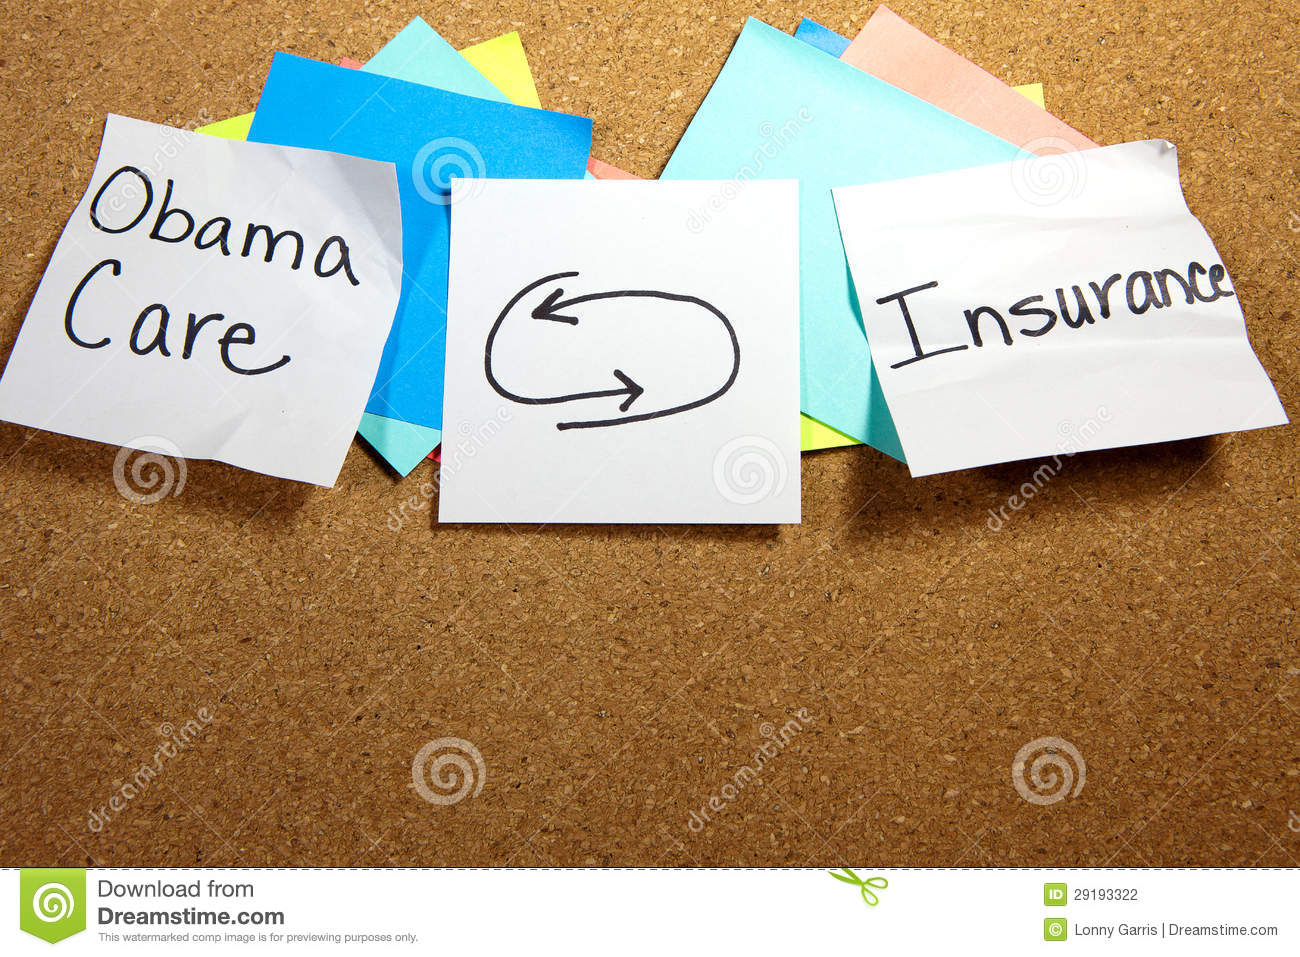 Obama Care Insurance Stock Photography   Image  29193322